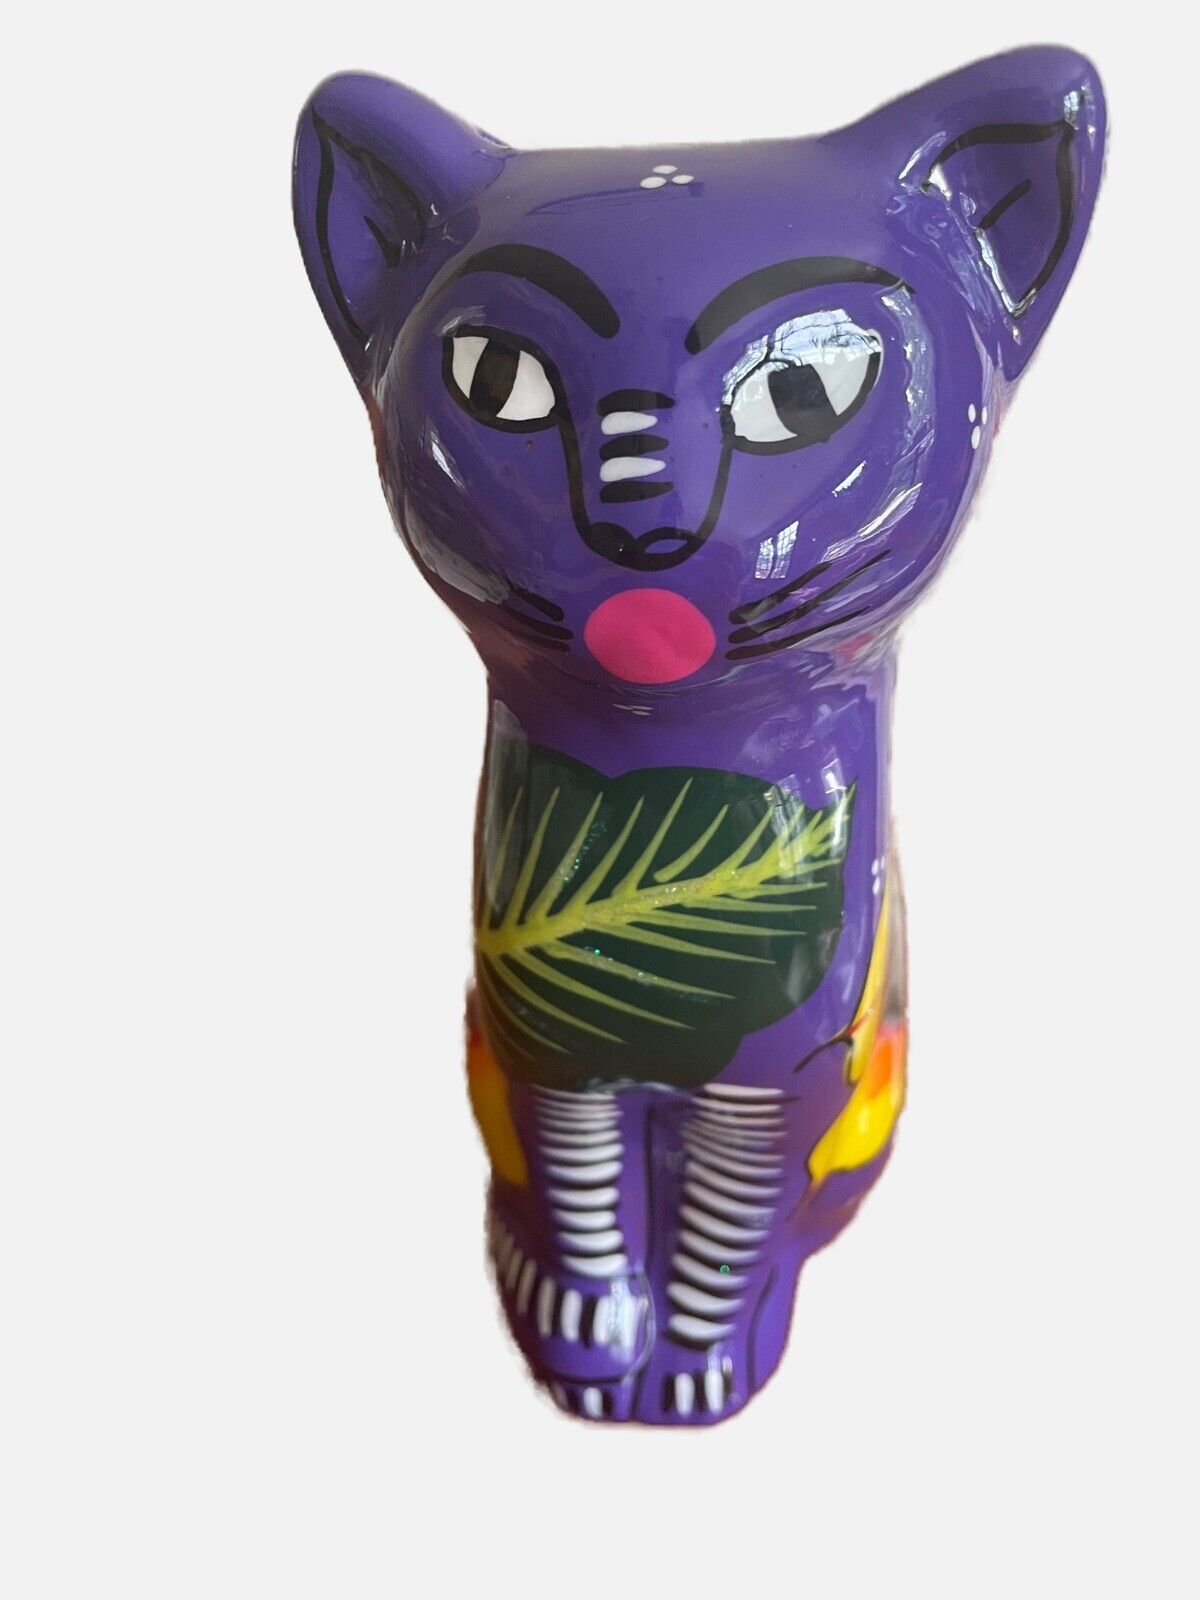 Vintage Talavera Terra Cotta Sitting Cat Figurine Hand-painted Mexico Folk Art